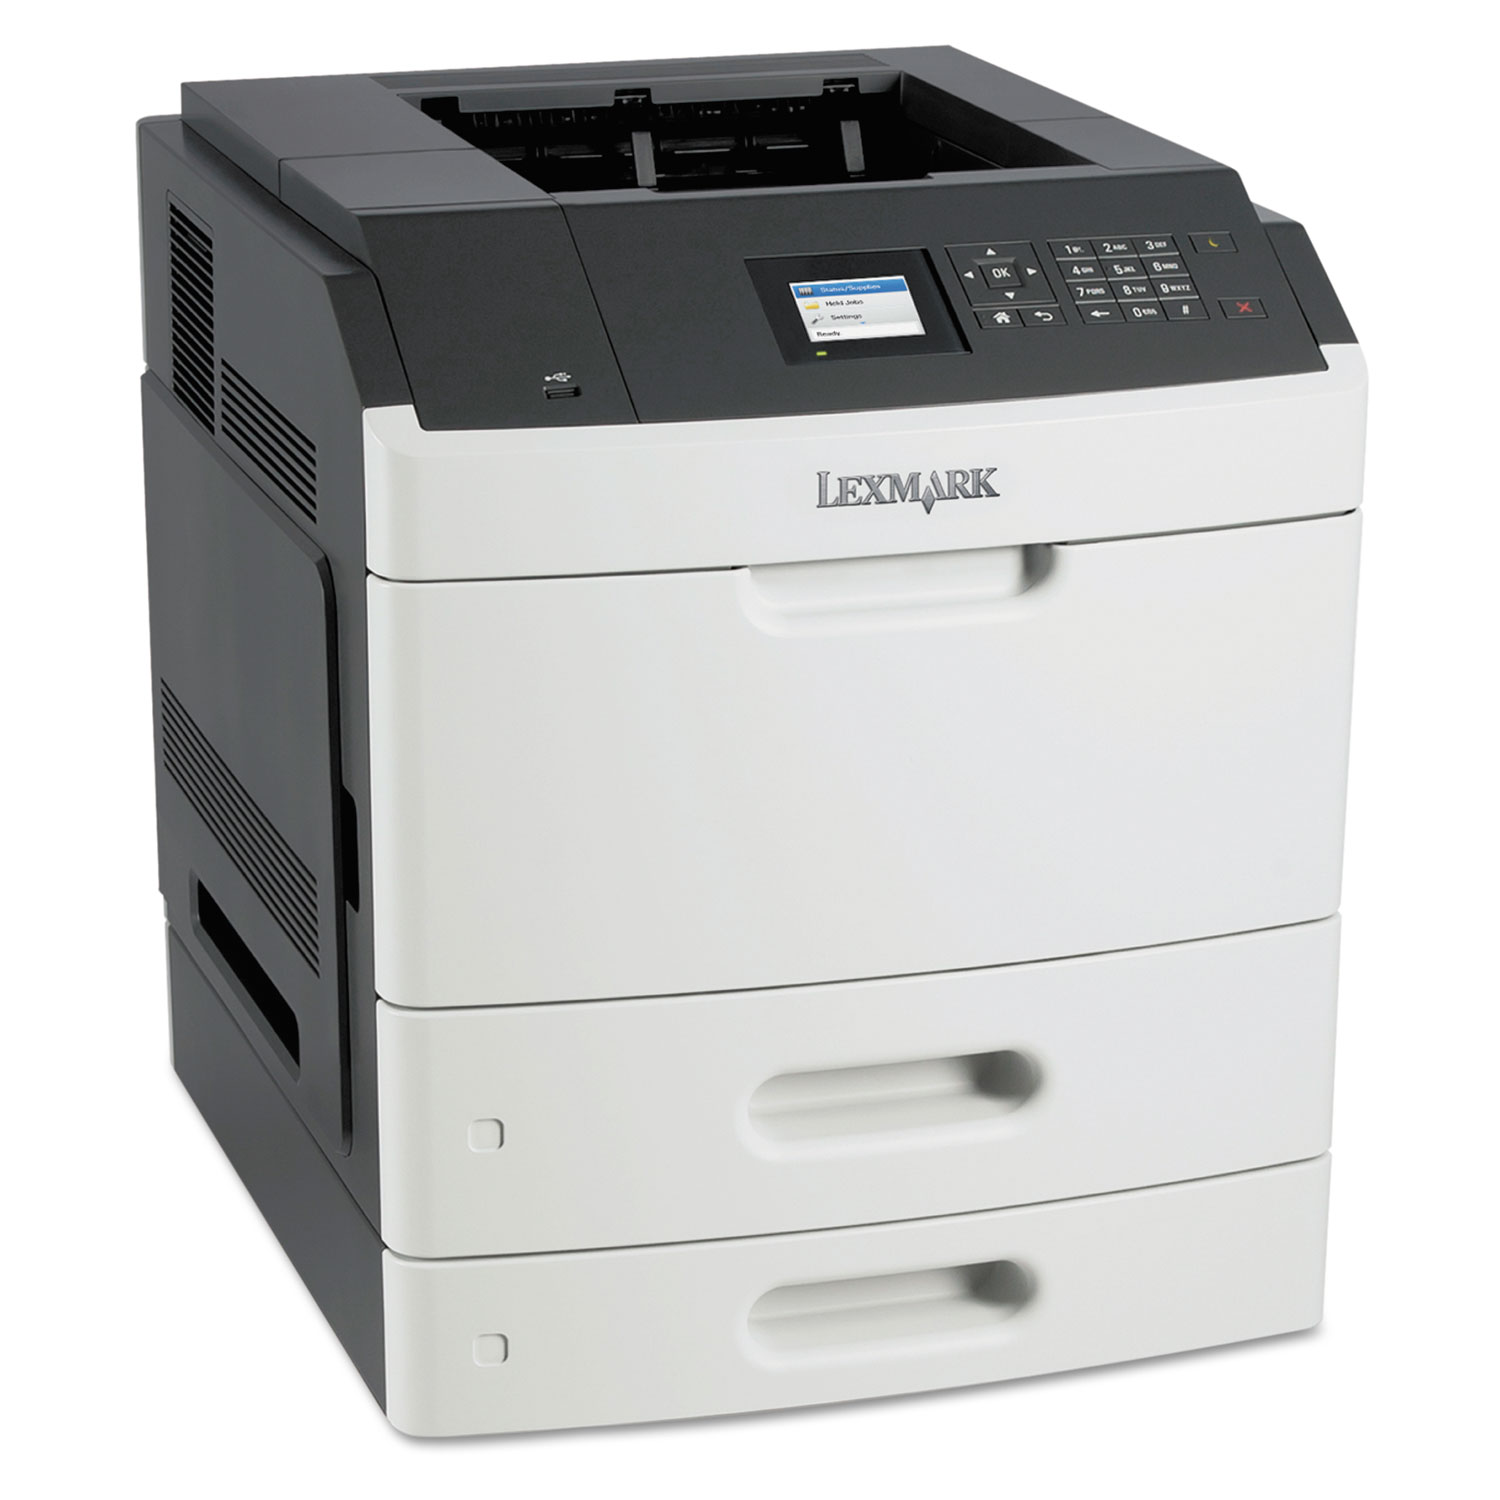 MS810dtn Laser Printer